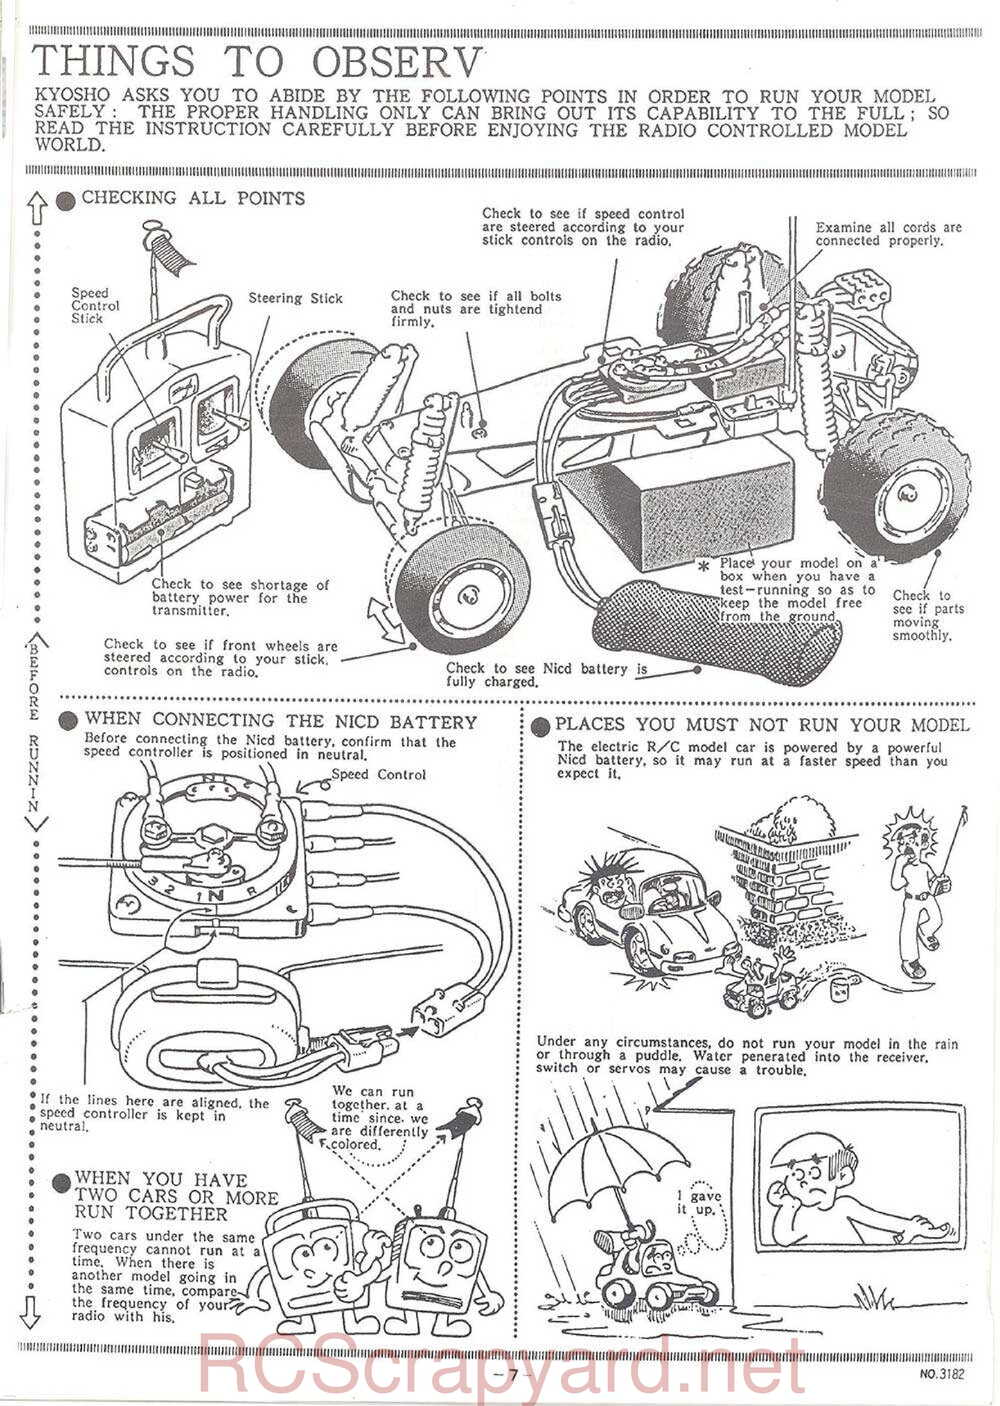 Kyosho - 3182 - Aero-Streak - Manual - Page 07